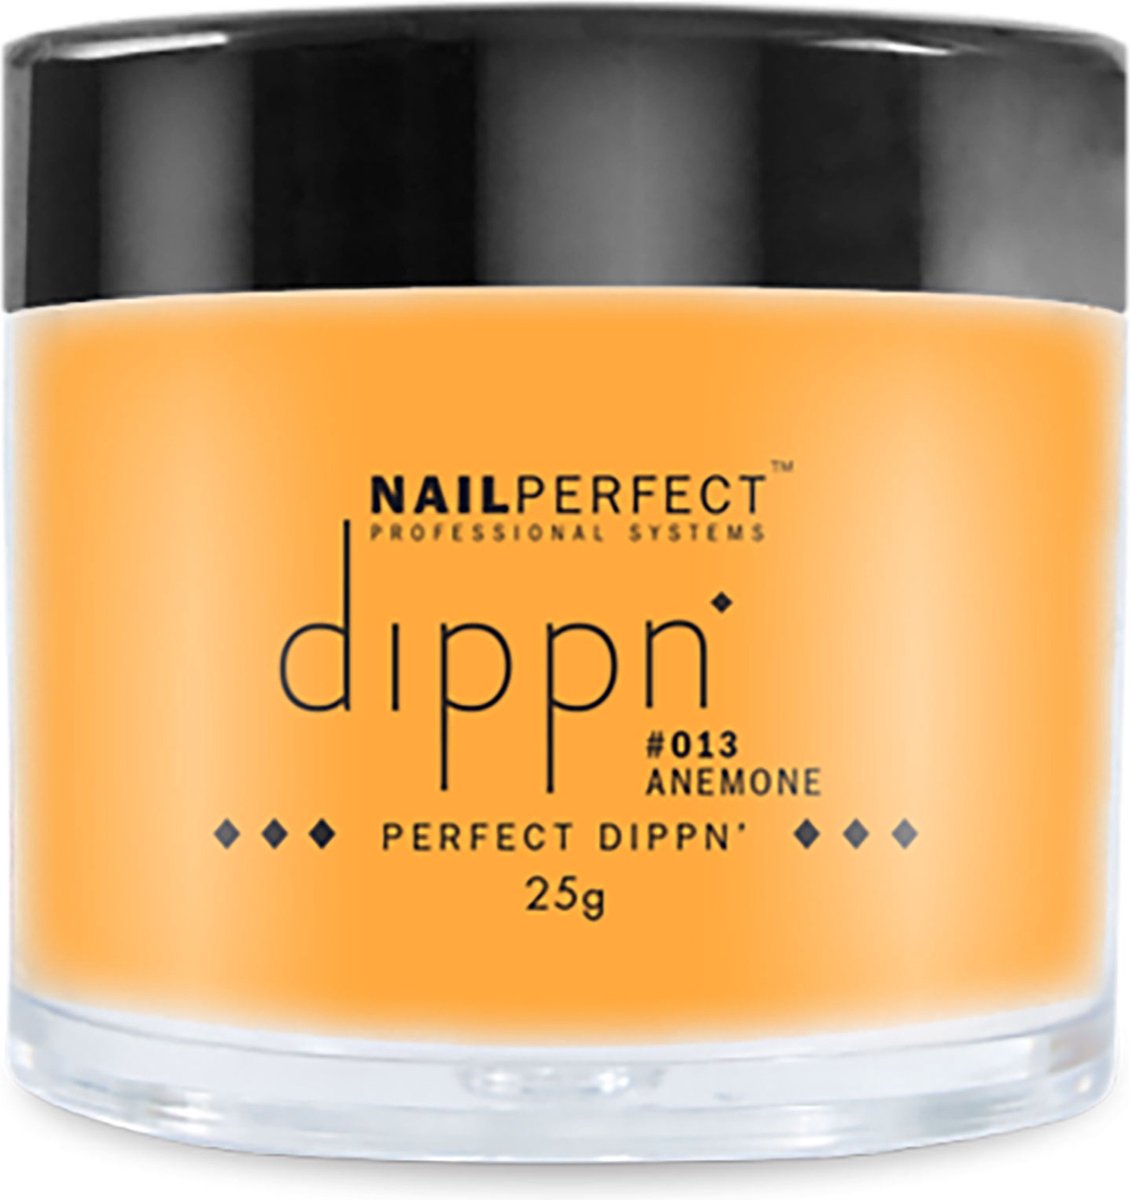 Nail Perfect - Dippn - #013 Anemone - 25gr